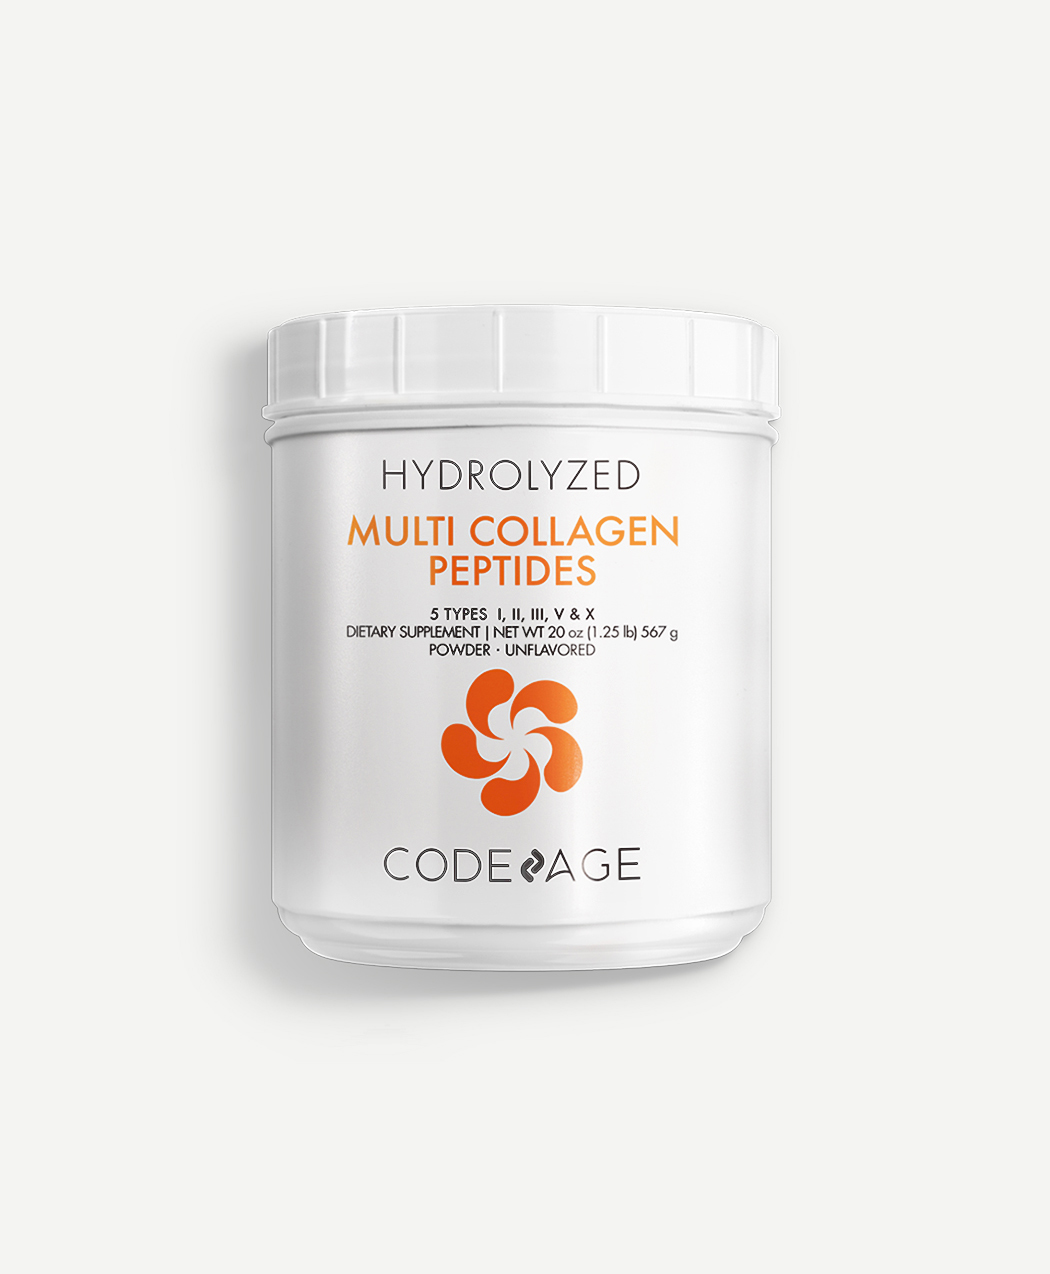 Bột Collagen Tổng Hợp Giúp Trẻ Hóa Da CodeAge Hydrolyzed Multi Protein Powder 567g